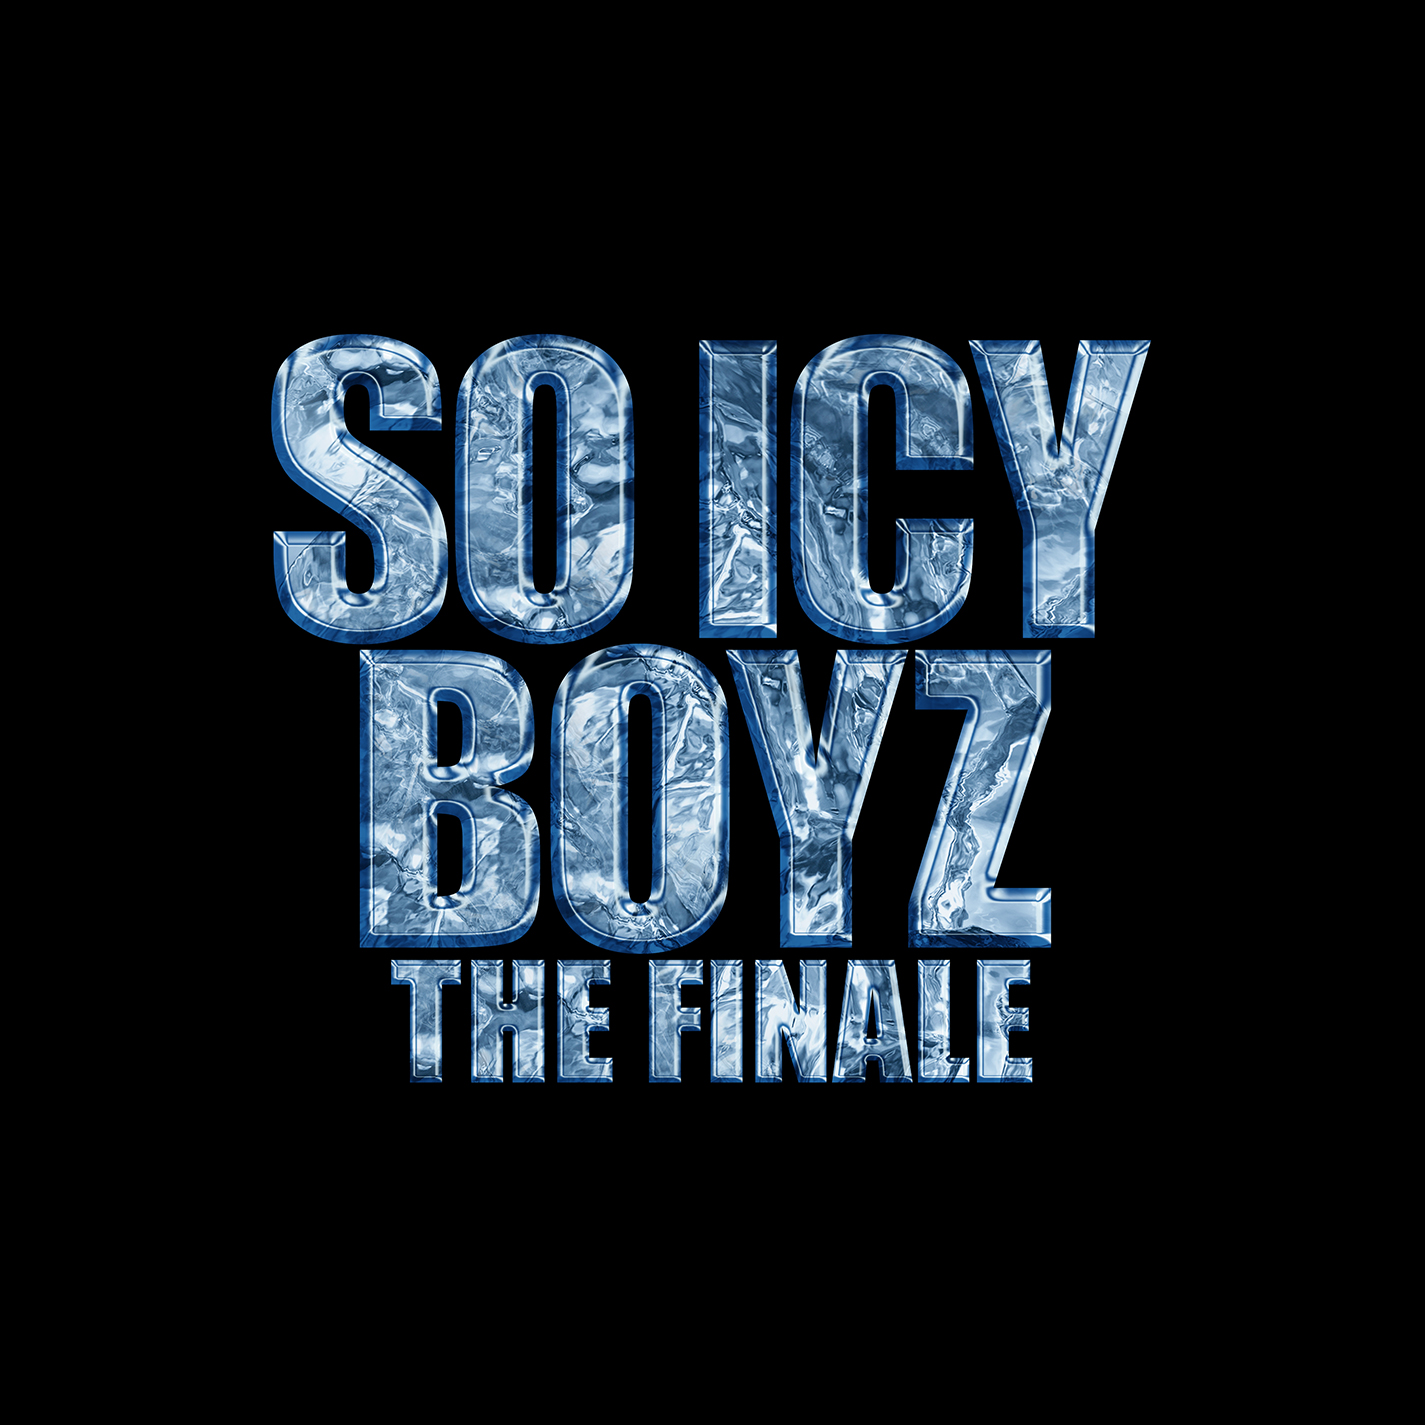 So Icy Boyz: The Finale